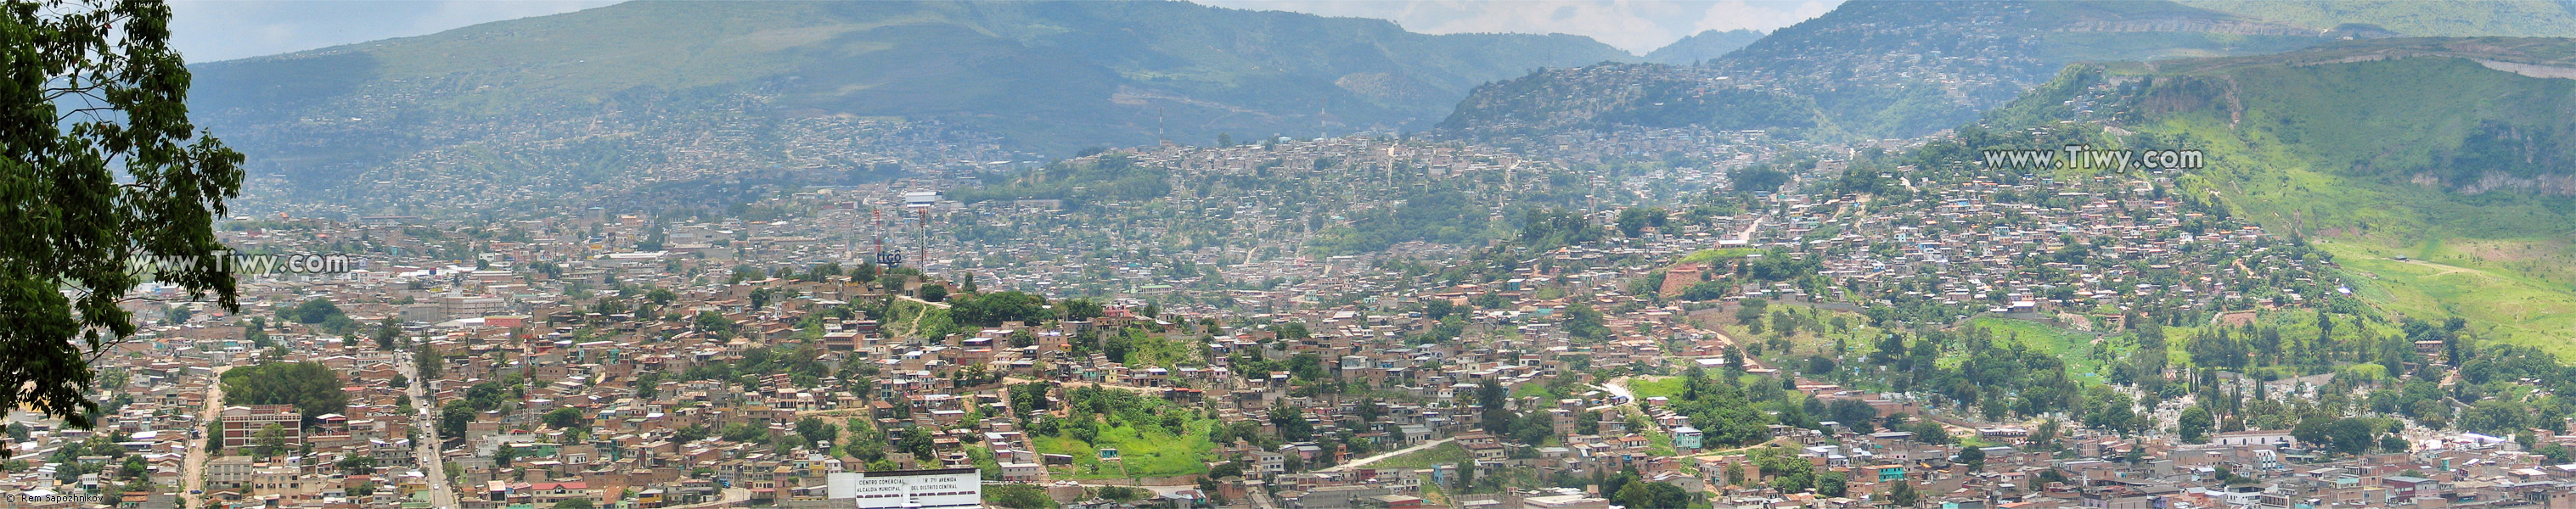 Vista panormica de Tegucigalpa